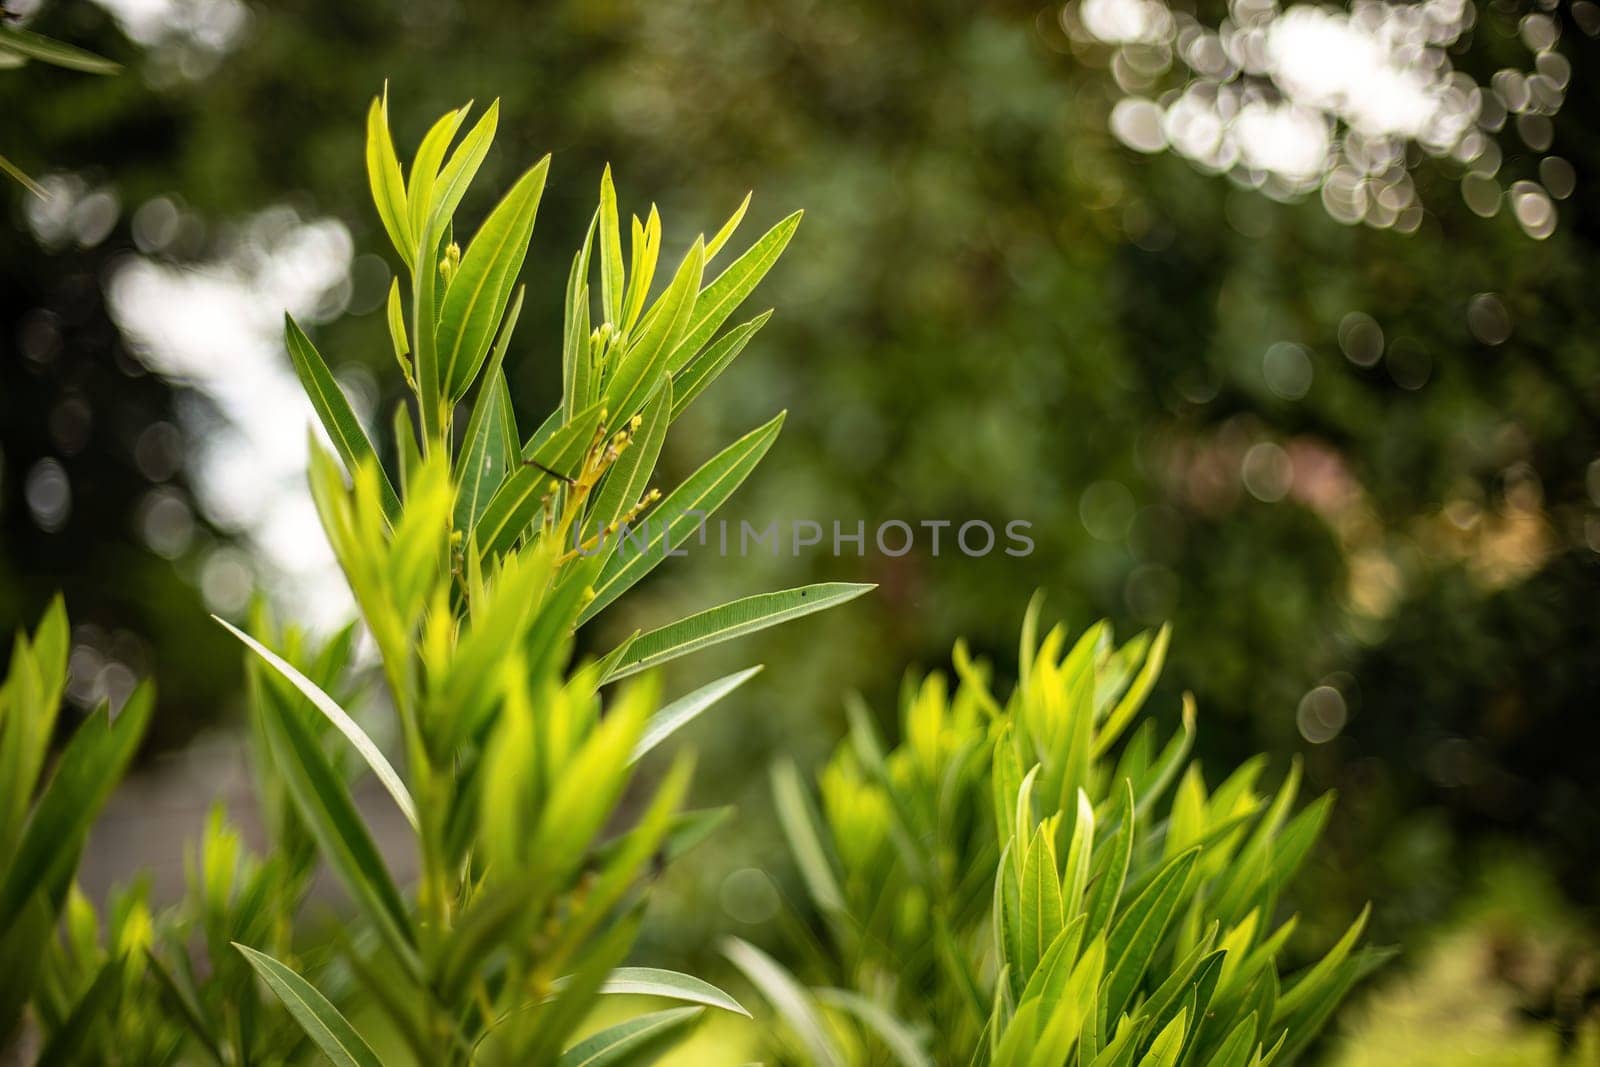 Oleander Leaves Close-Up Detail by pippocarlot